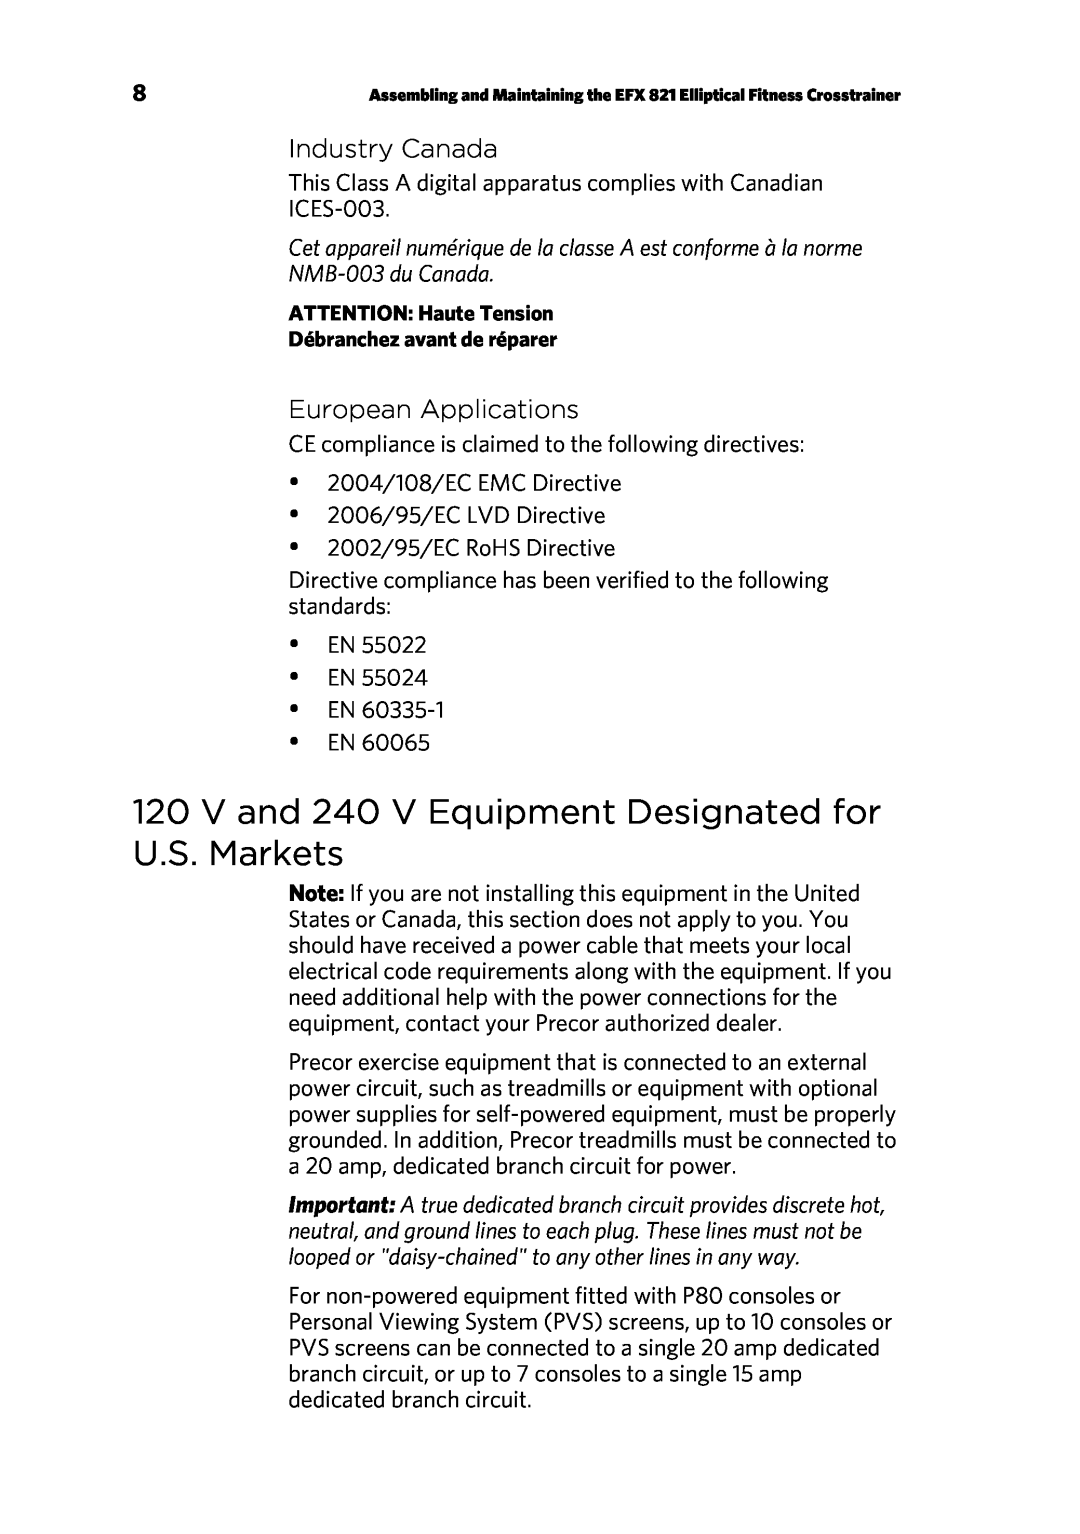 Precor 300753-201 manual V and 240 V Equipment Designated for U.S. Markets, Industry Canada, European Applications 